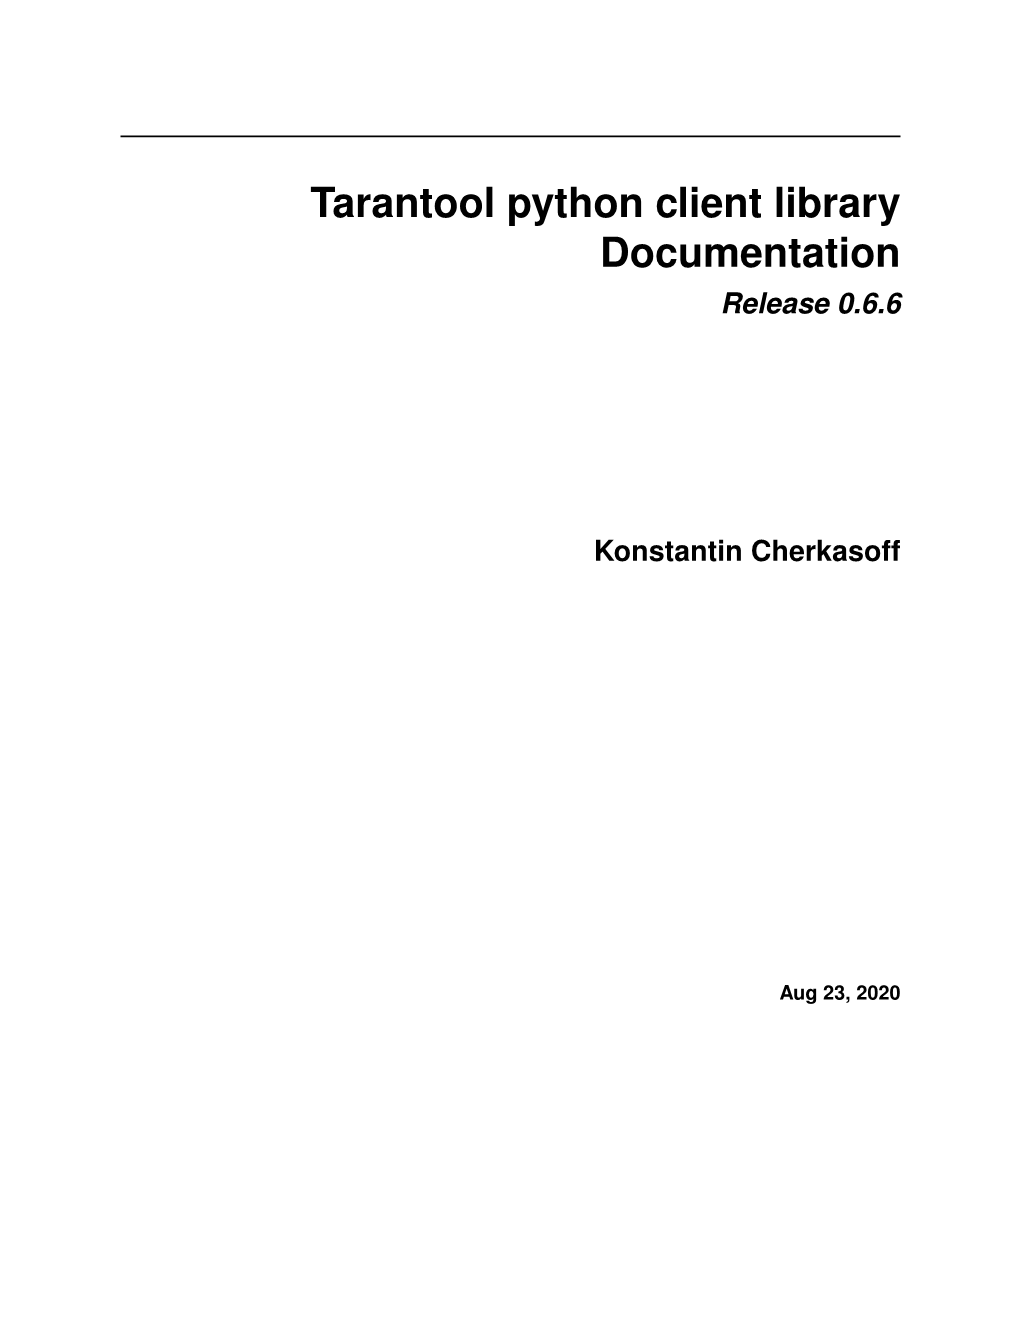 Tarantool Python Client Library Documentation Release 0.6.6